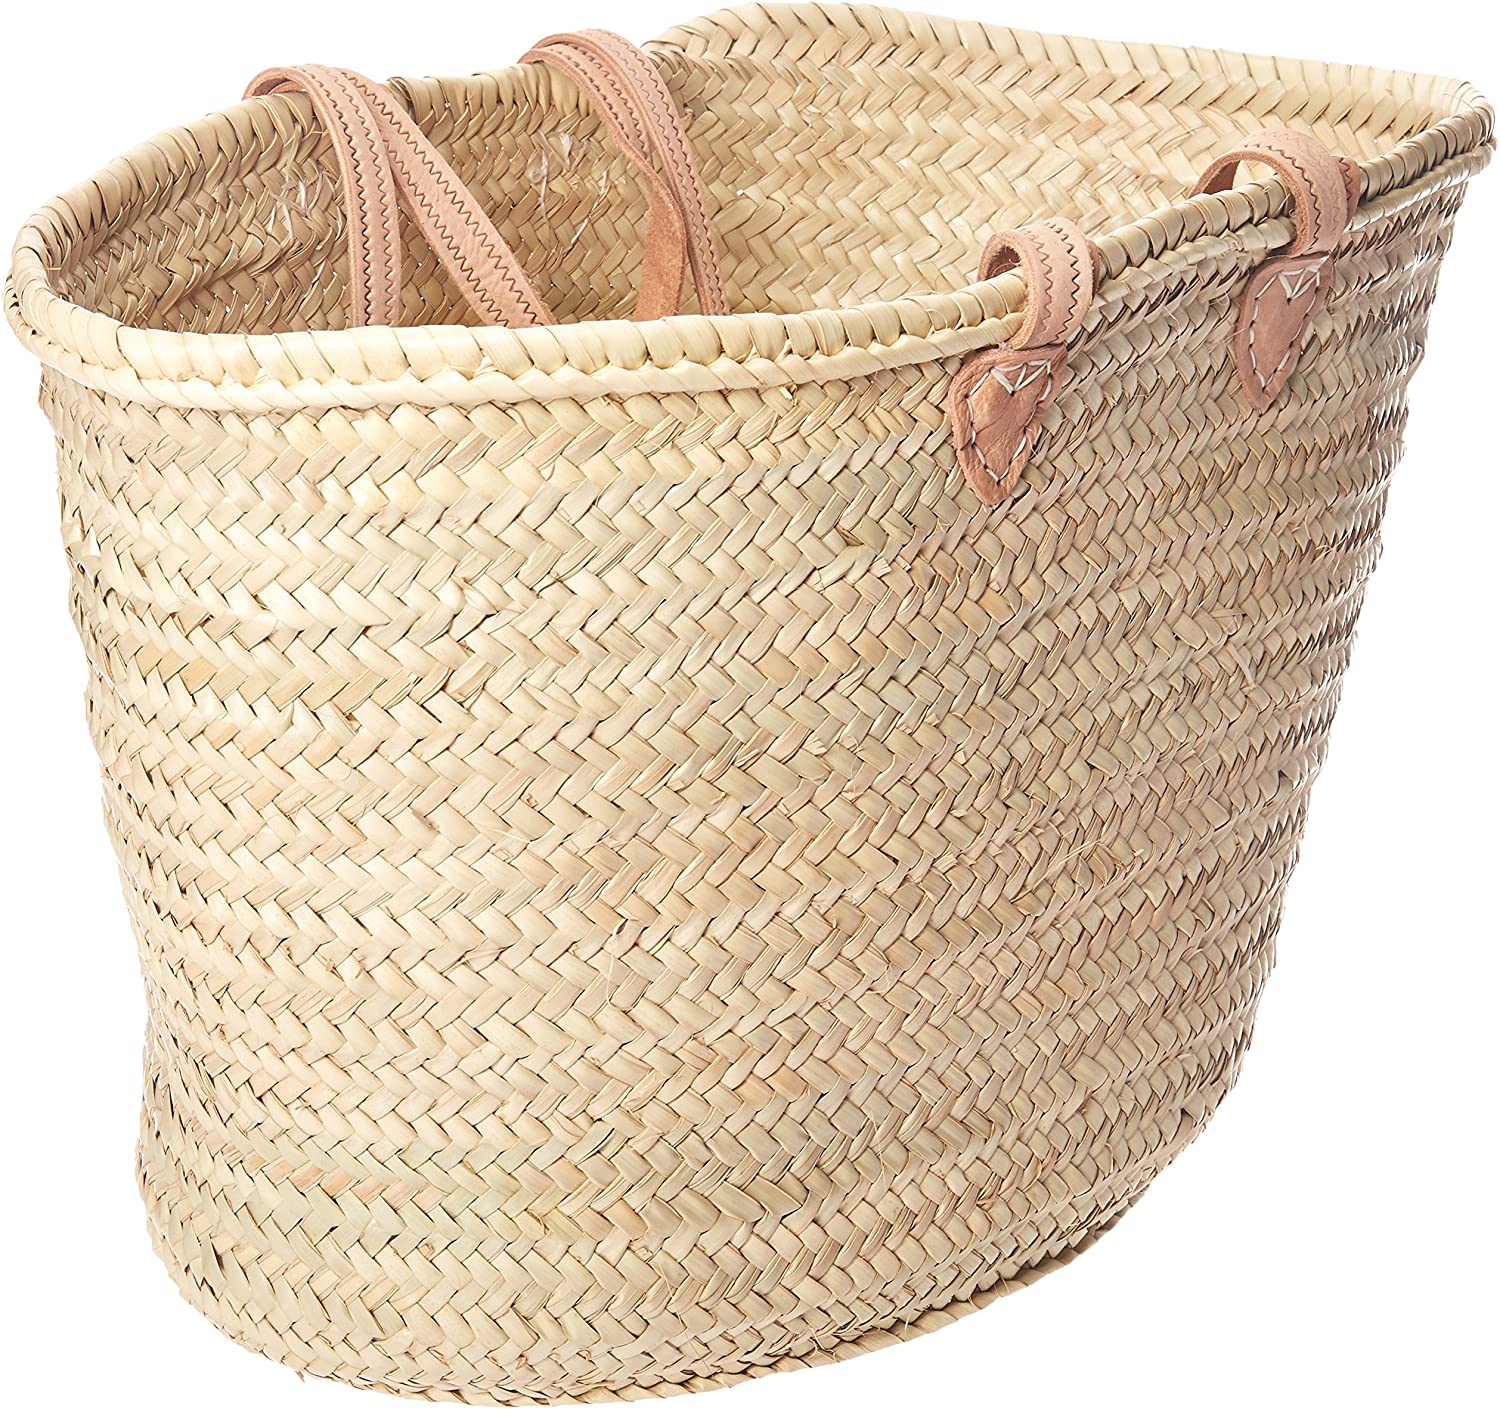 French summer bag essentials market basket